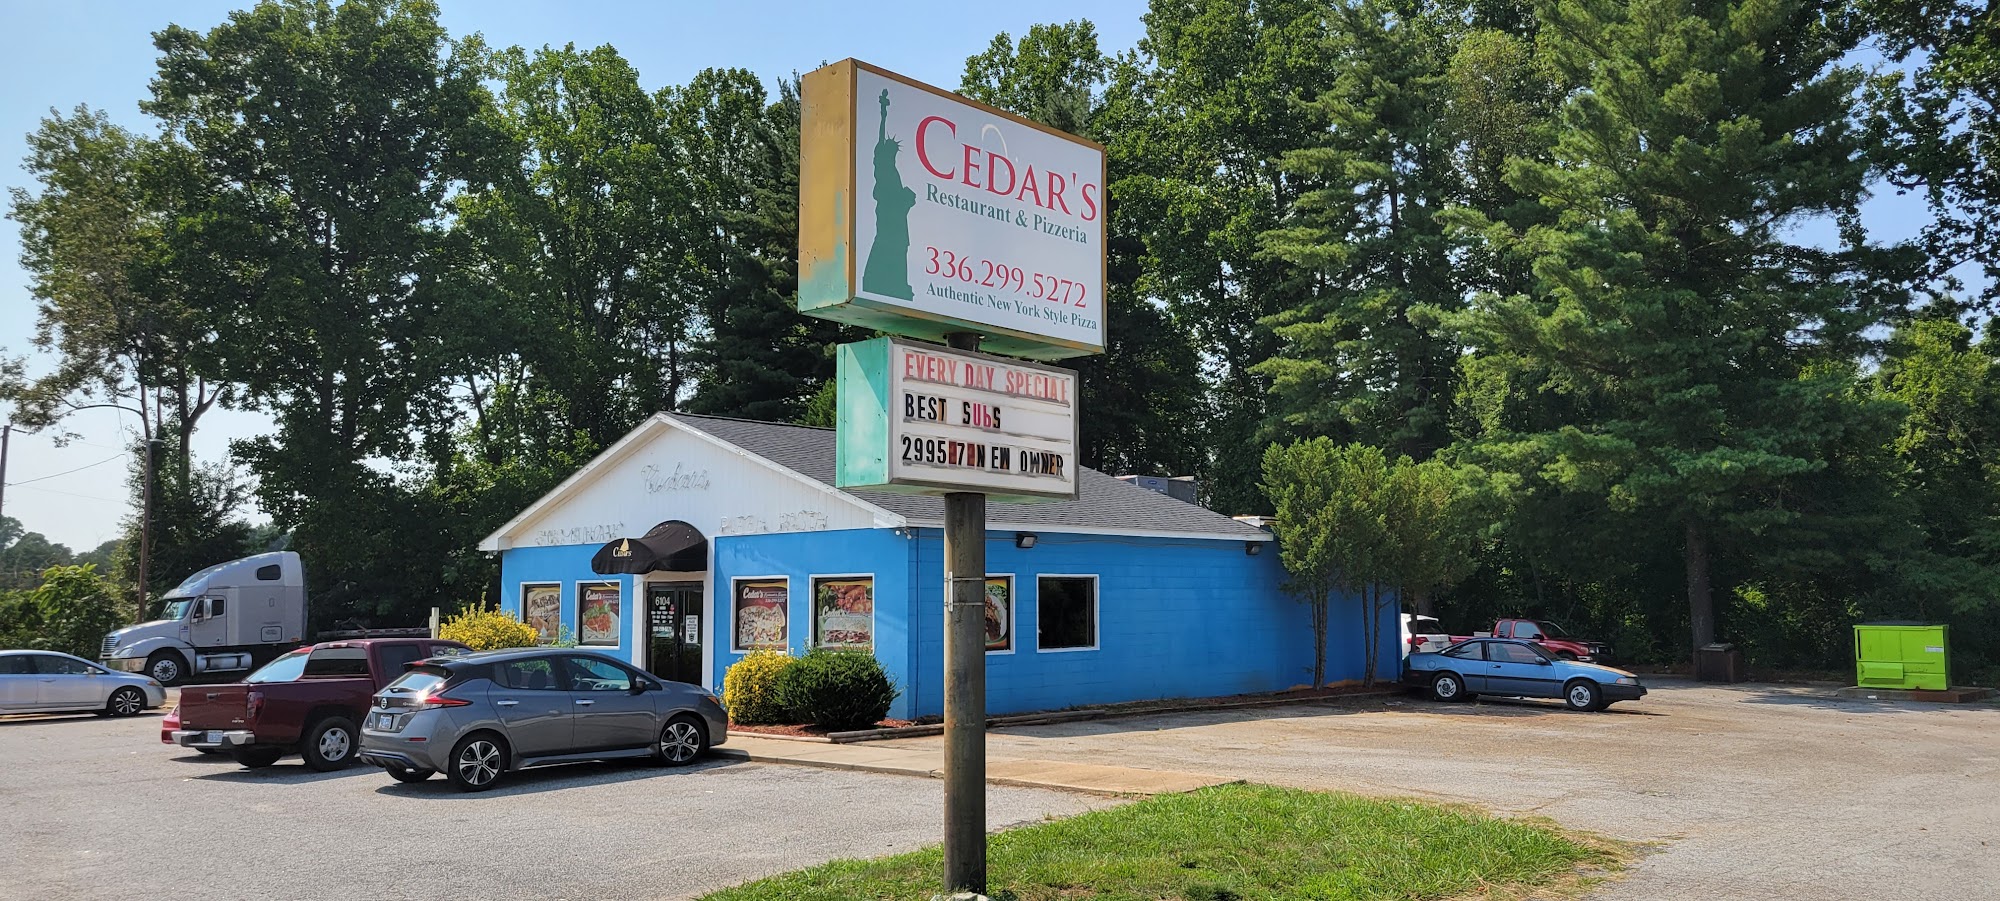 Cedar's Restaurant & Pizzeria